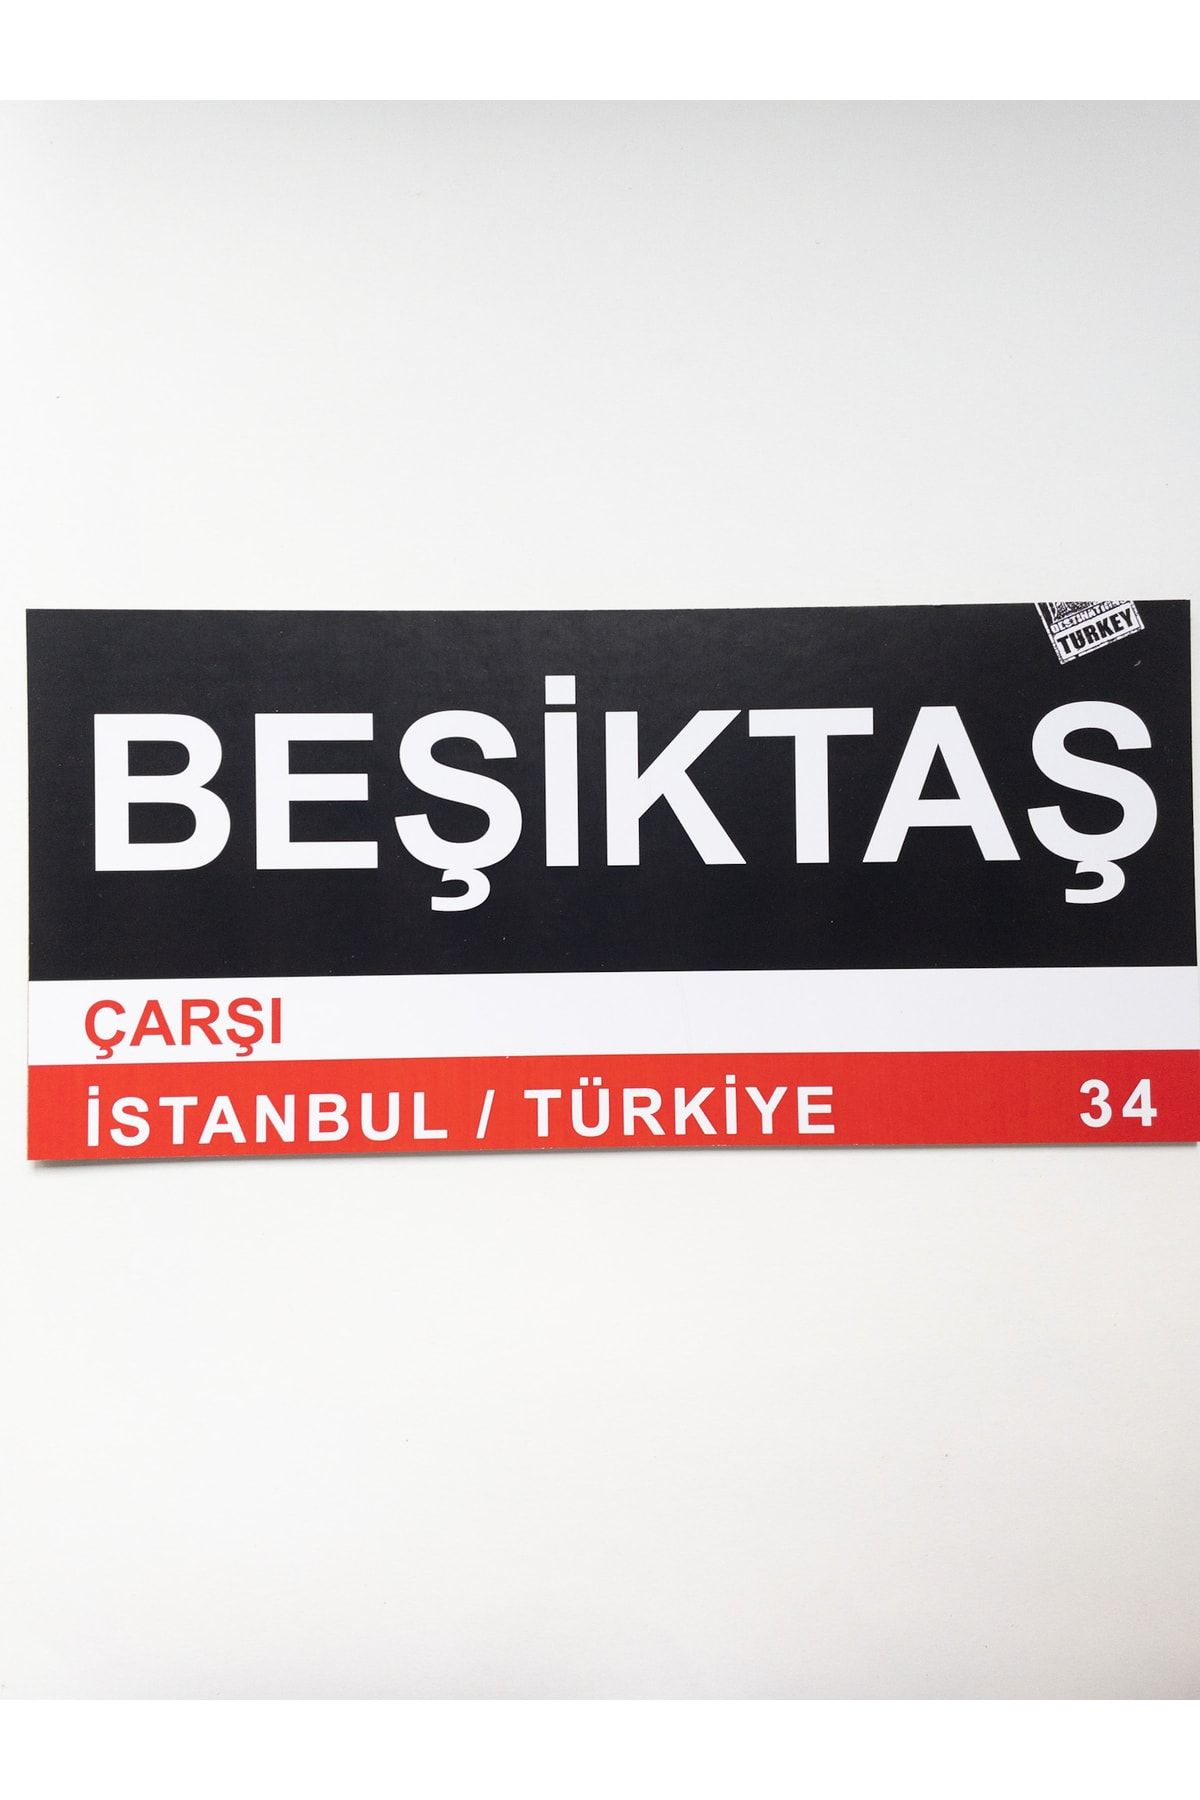 NiceandBonita Beşiktaş, Çarşı, Istanbul, Siyah, Beyaz, Kırmızı Tabela